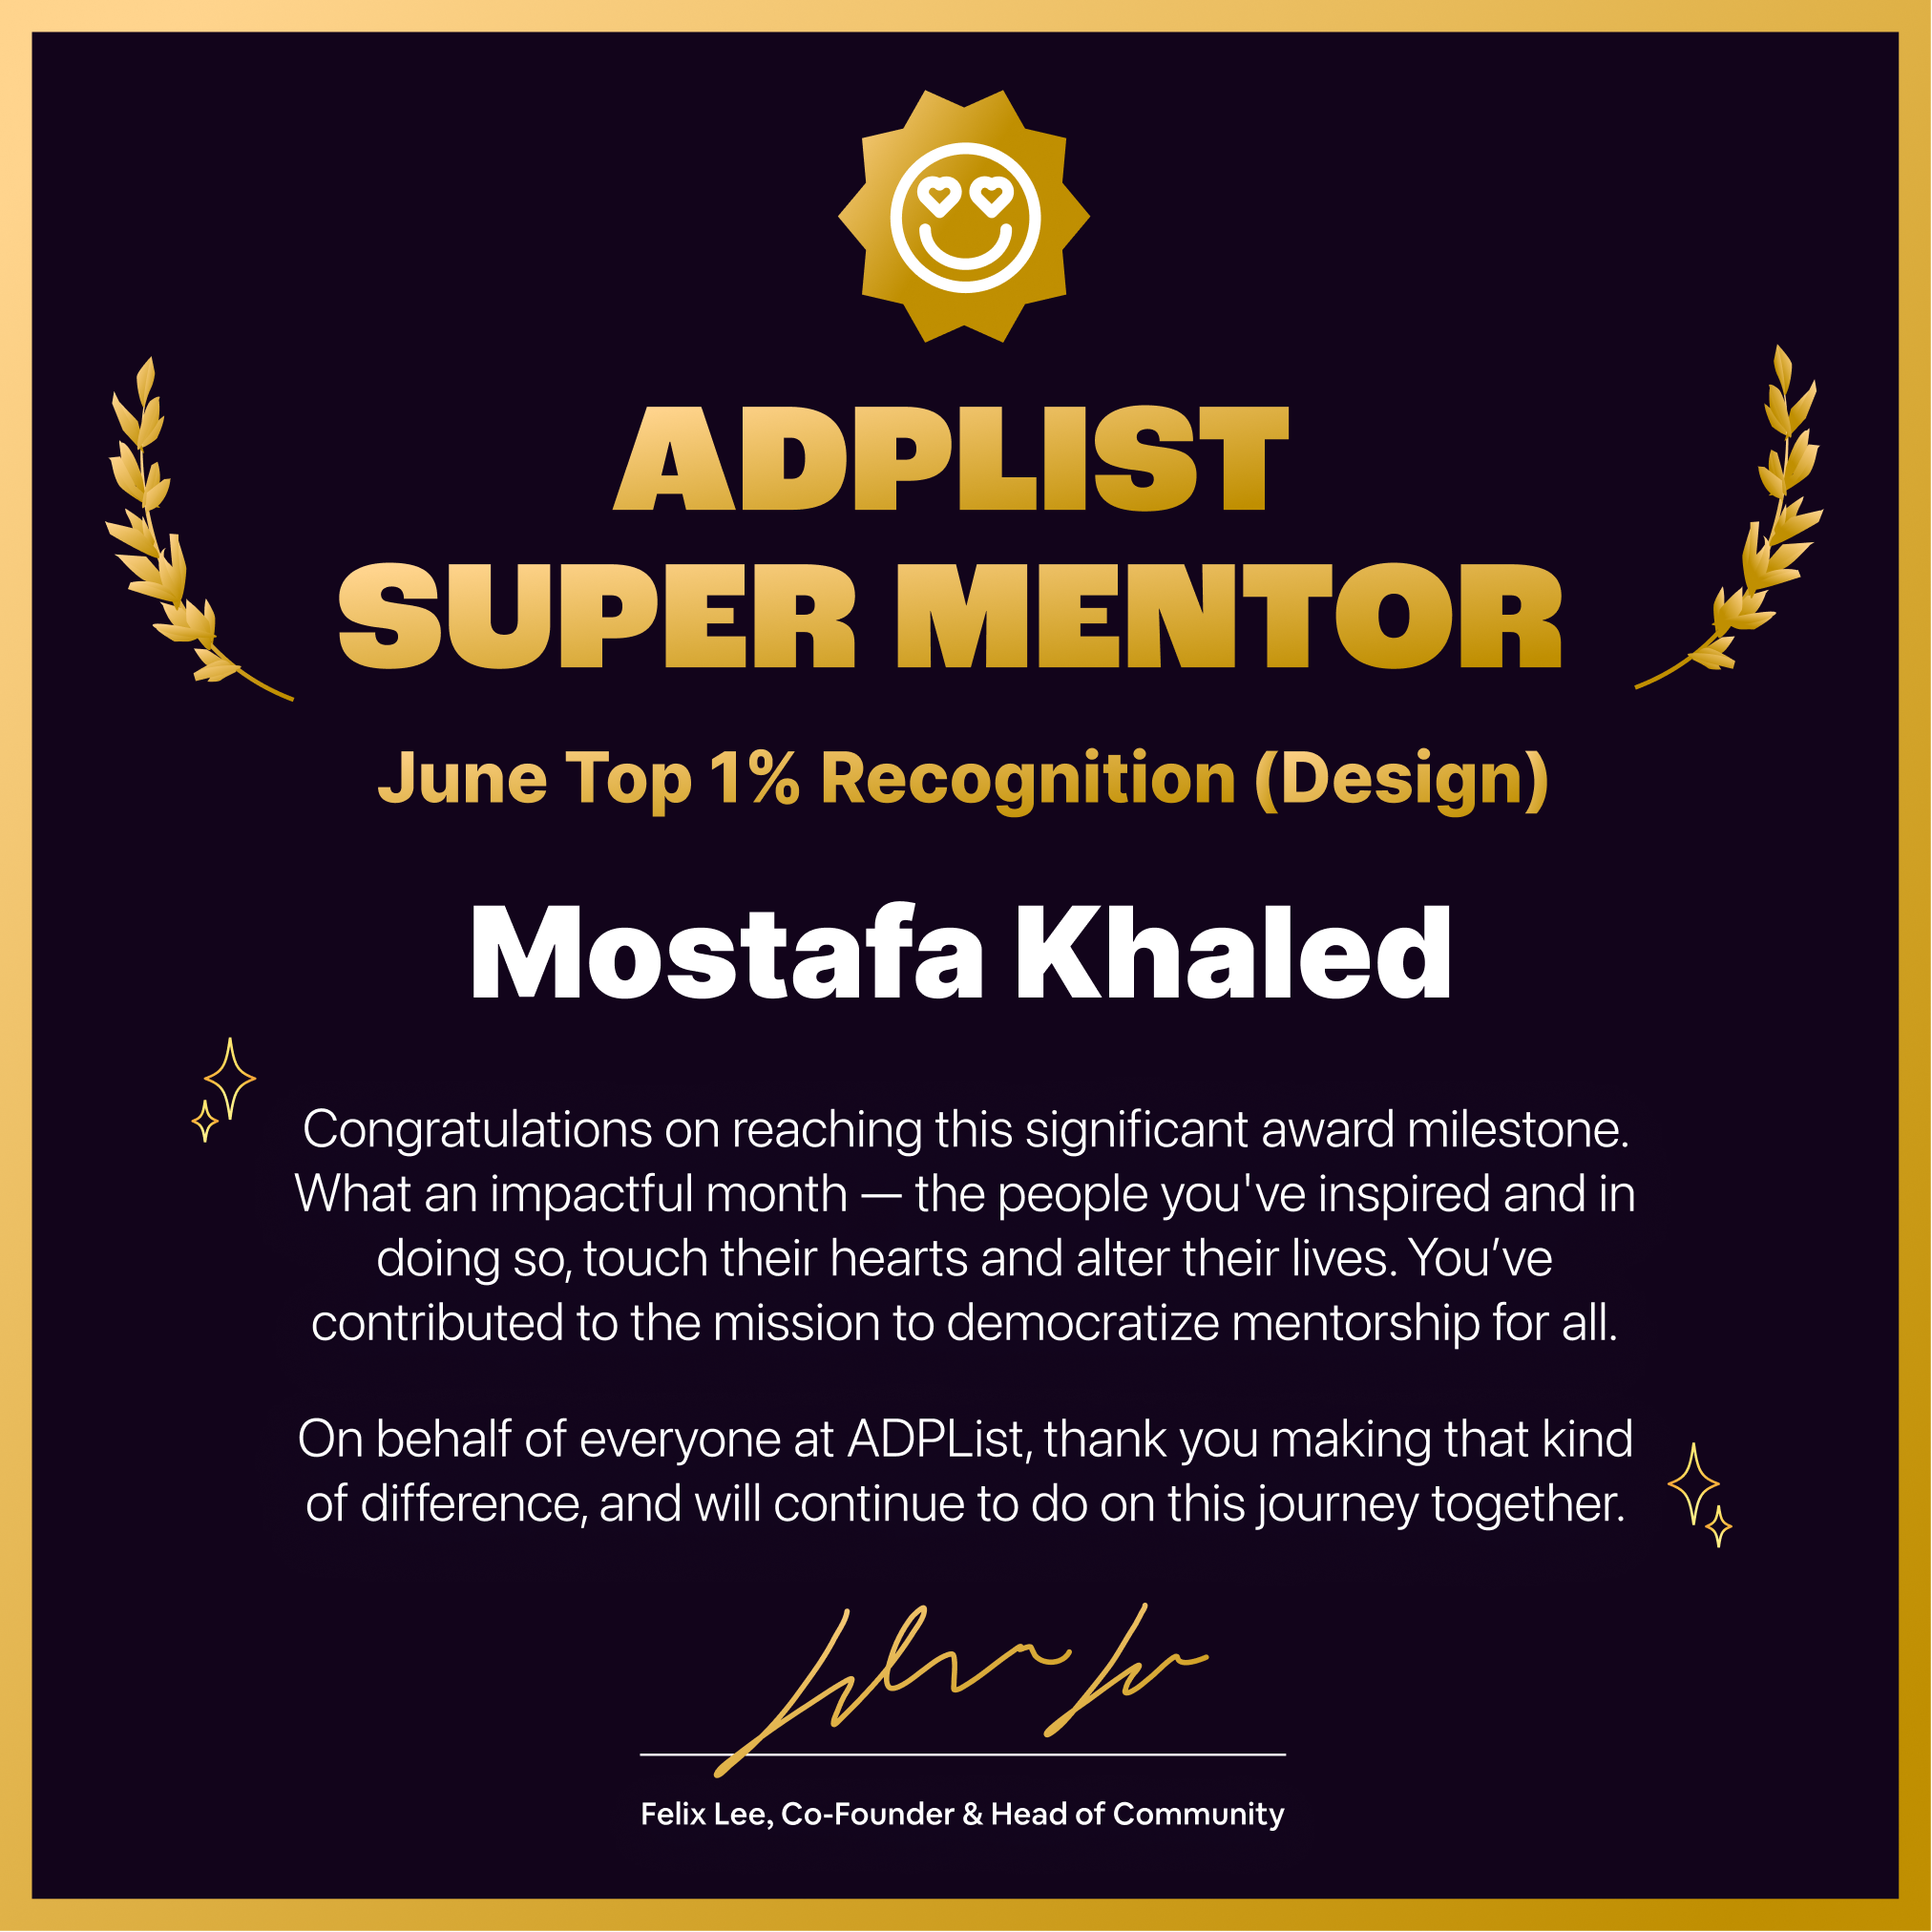 Adplist super mentor mostafa khaled a top design mentor